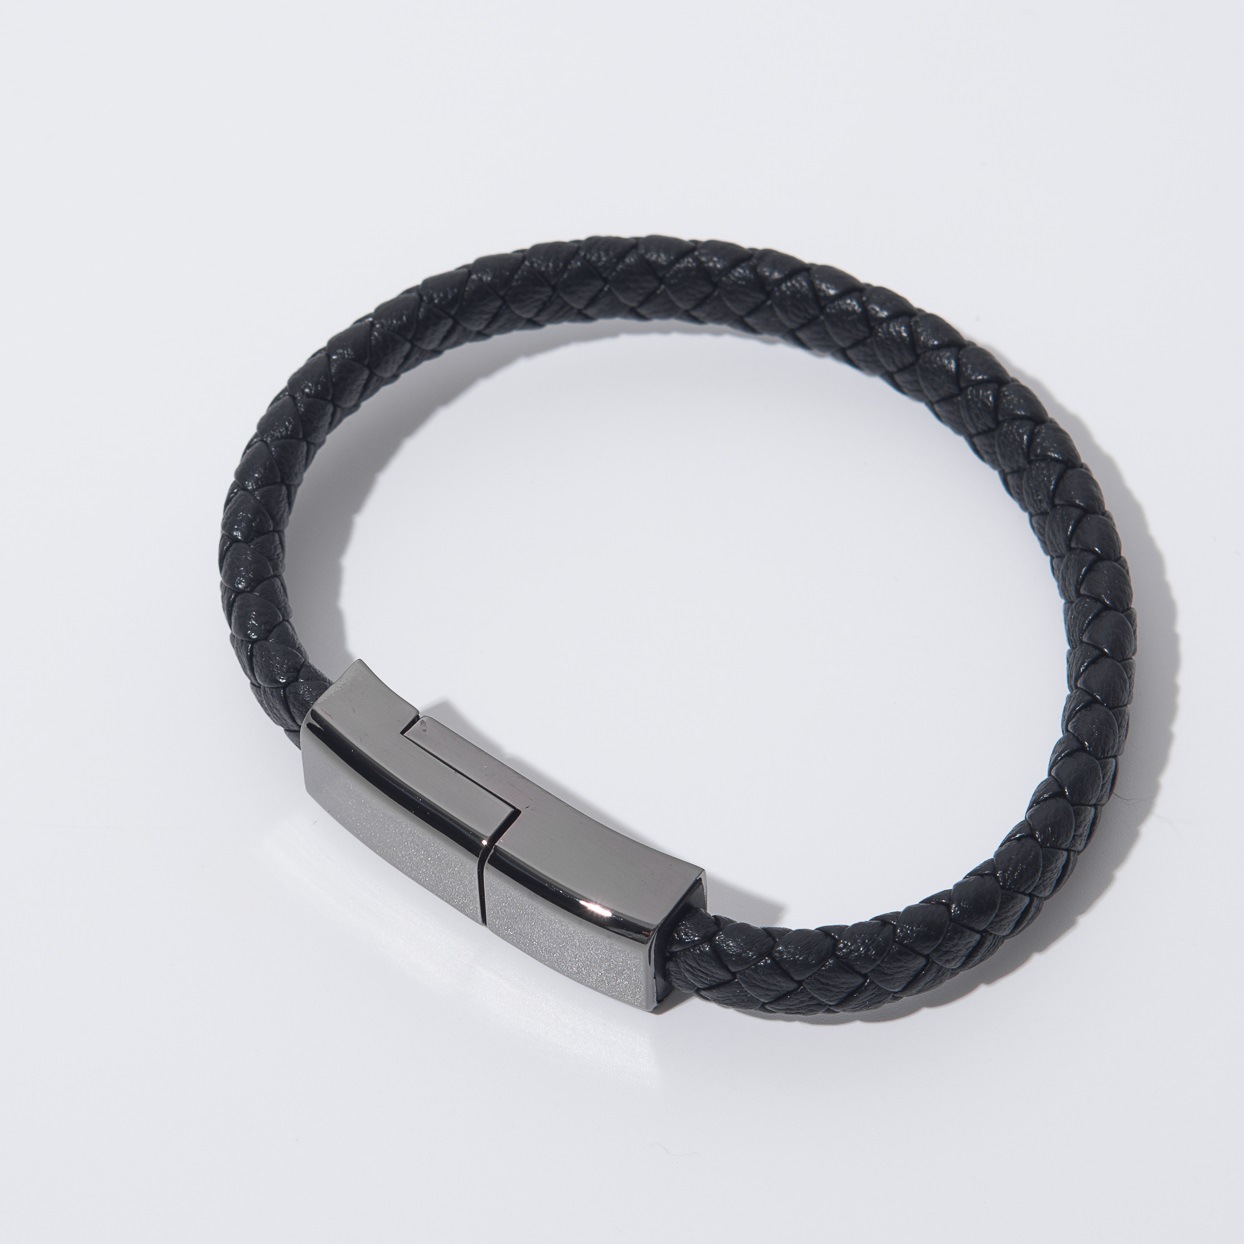 Leather data line bracelet